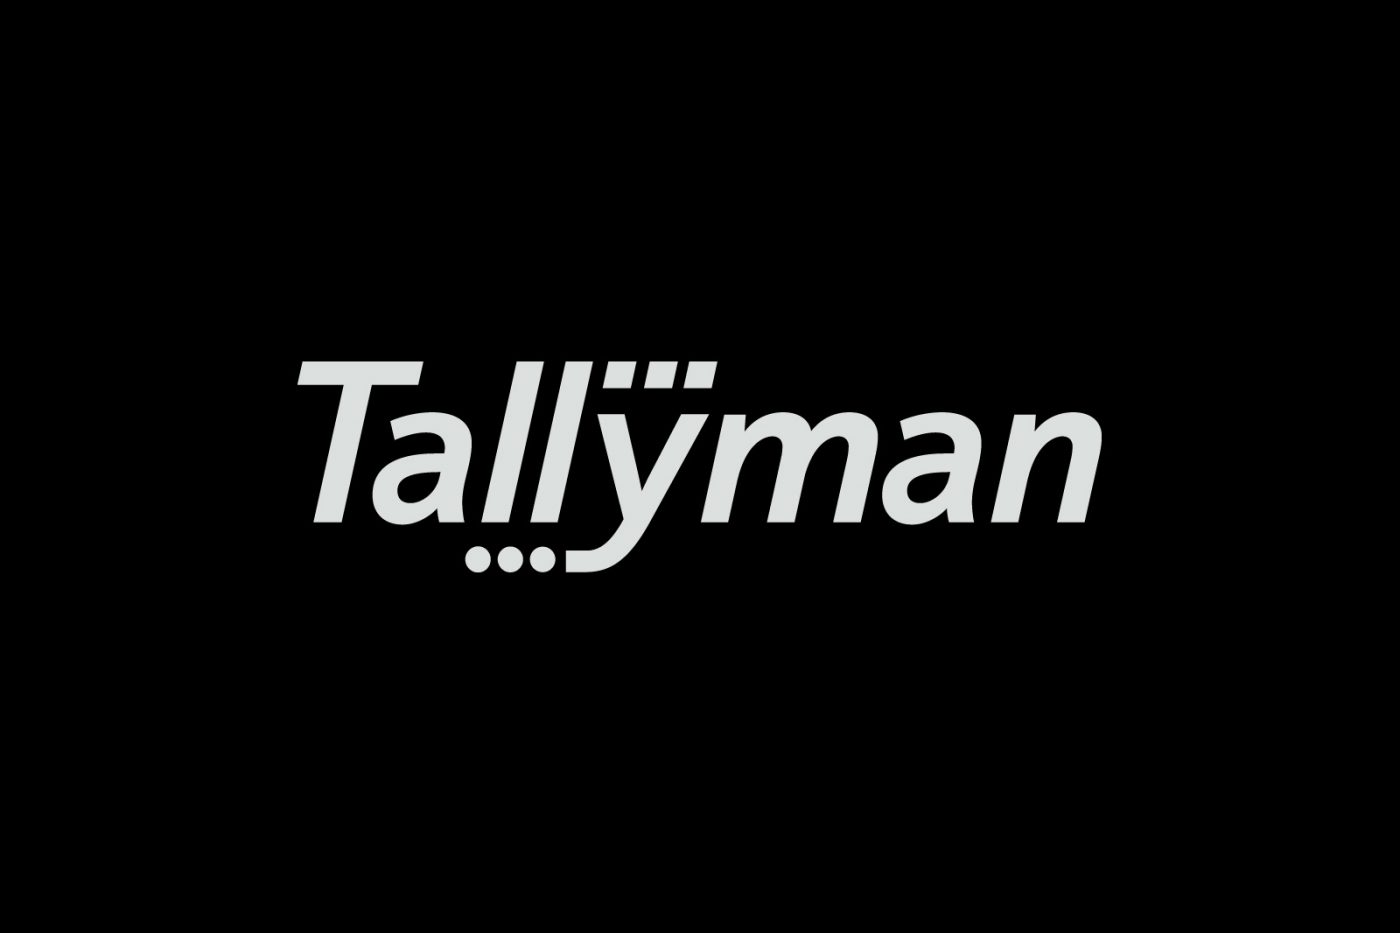 Tallyman